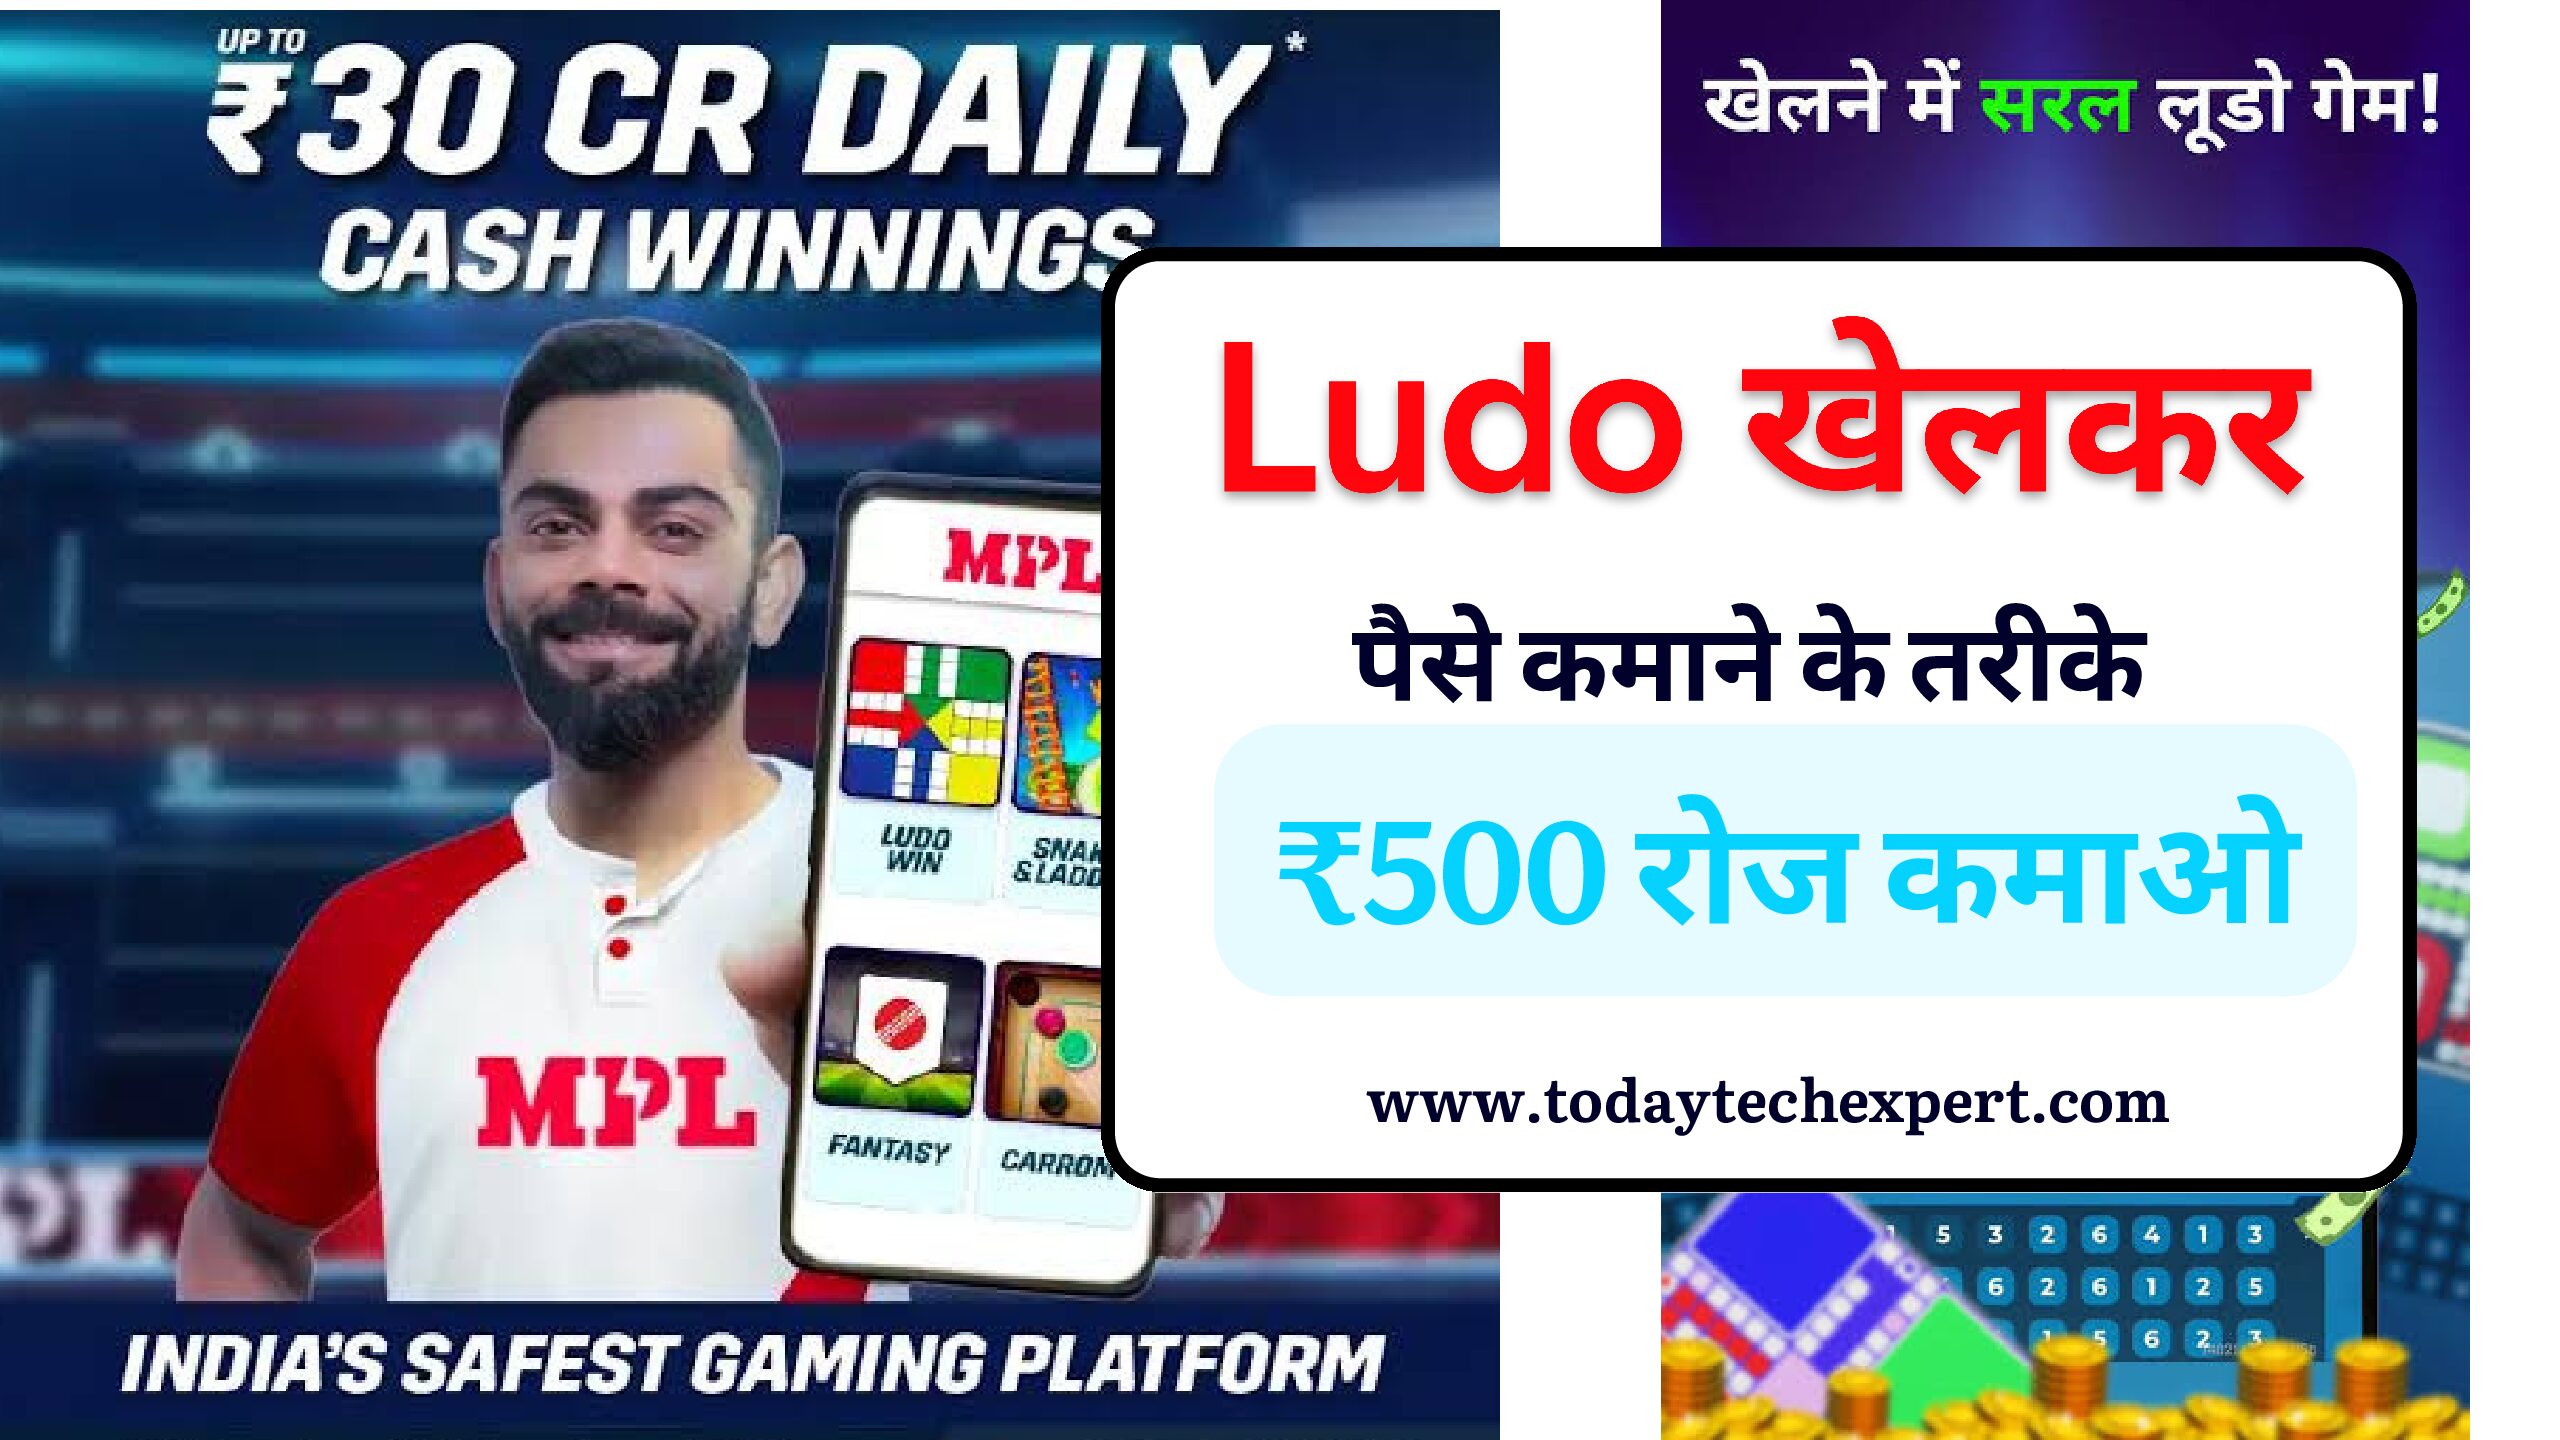 Ludo Paisa Kamane Wala - जीतें ₹500 रोज़